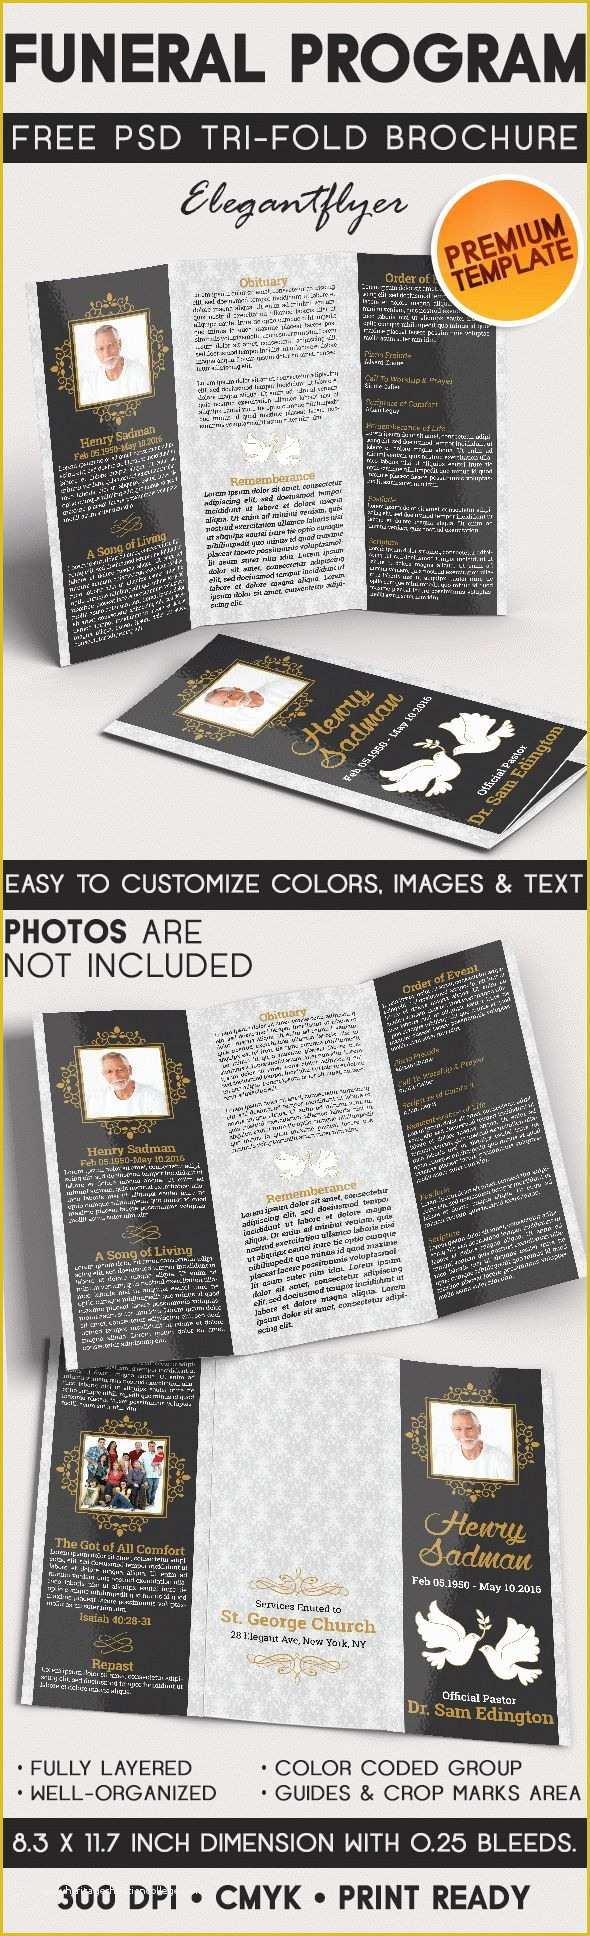 Free Funeral Flyer Template Psd Of Tri Fold Brochure for Funeral Program – by Elegantflyer